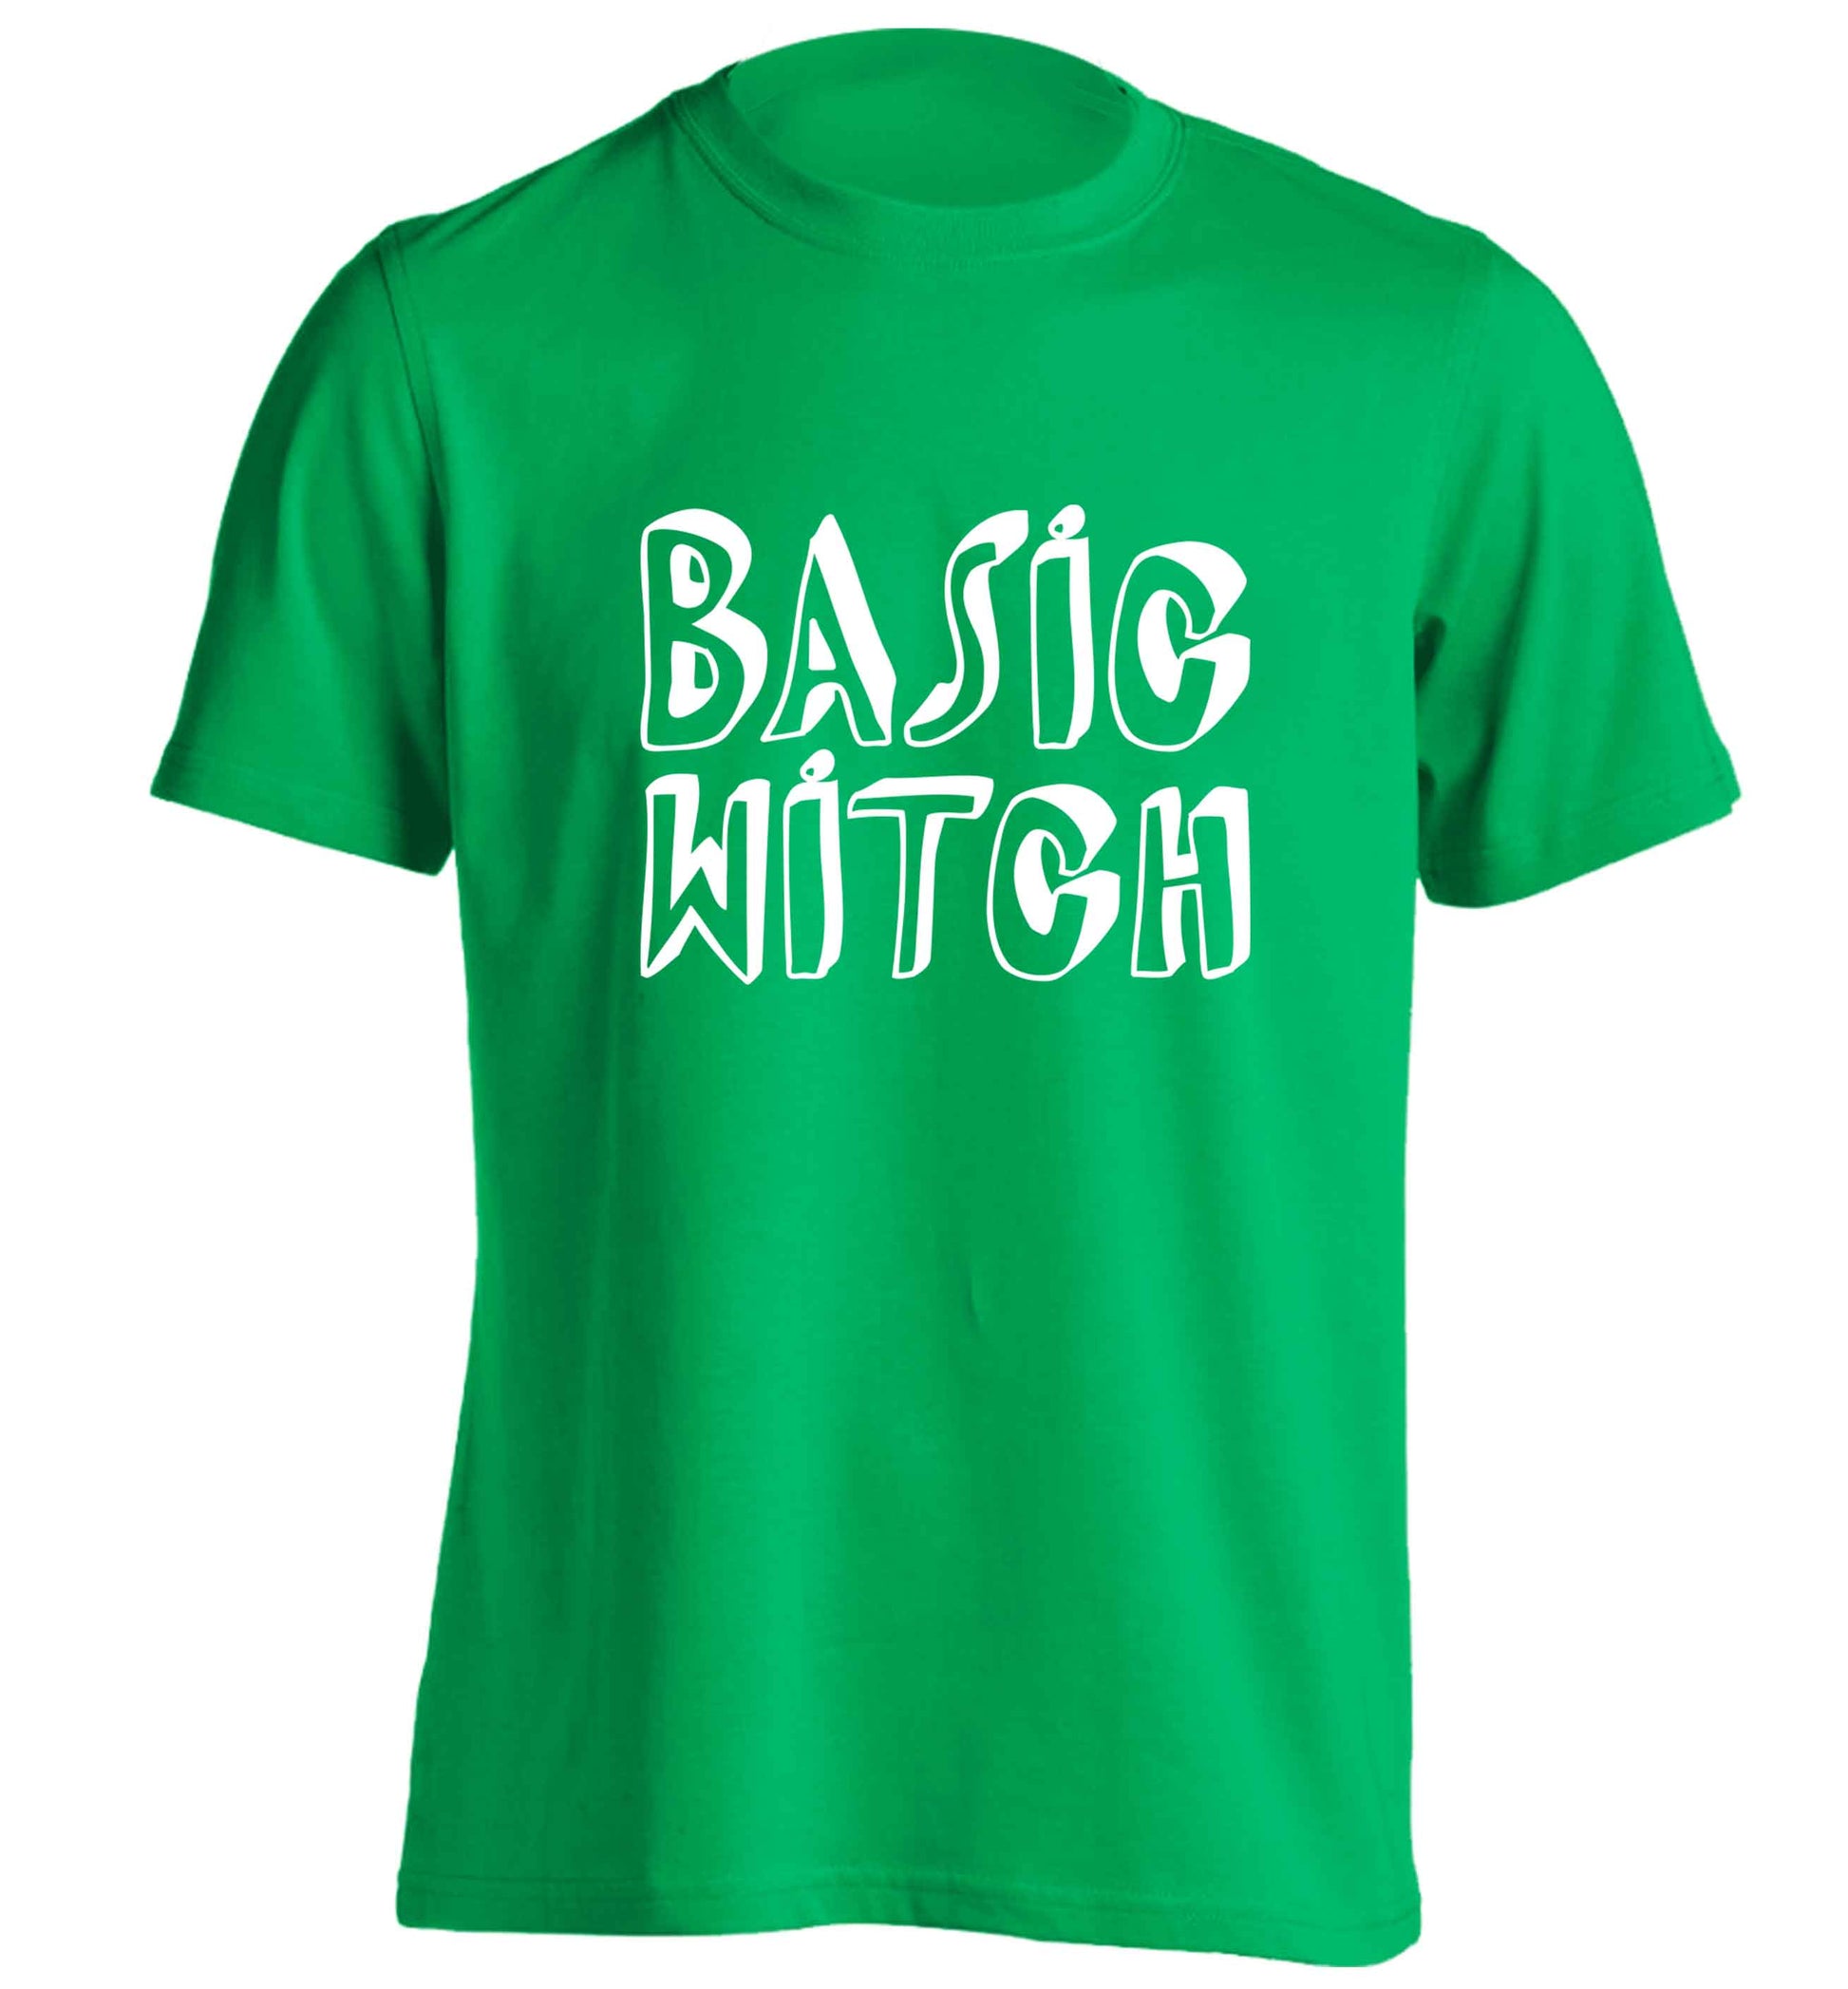 Basic witch adults unisex green Tshirt 2XL